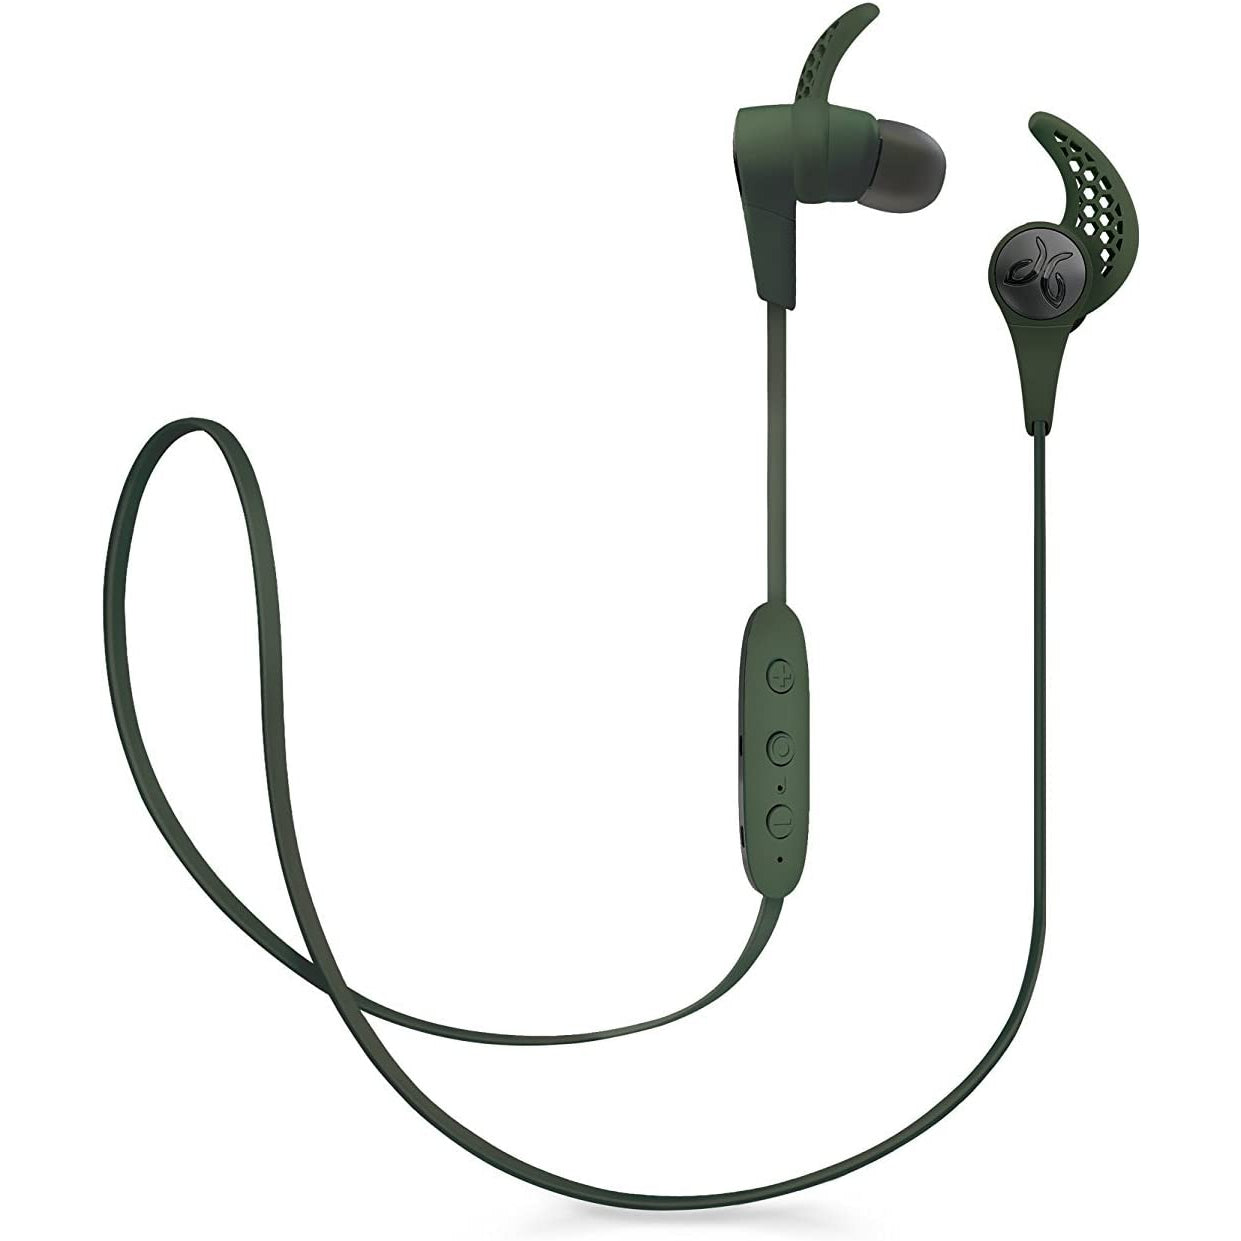 Jaybird X3 Bluetooth Wireless Headphones - Green - Refurbished Excellent